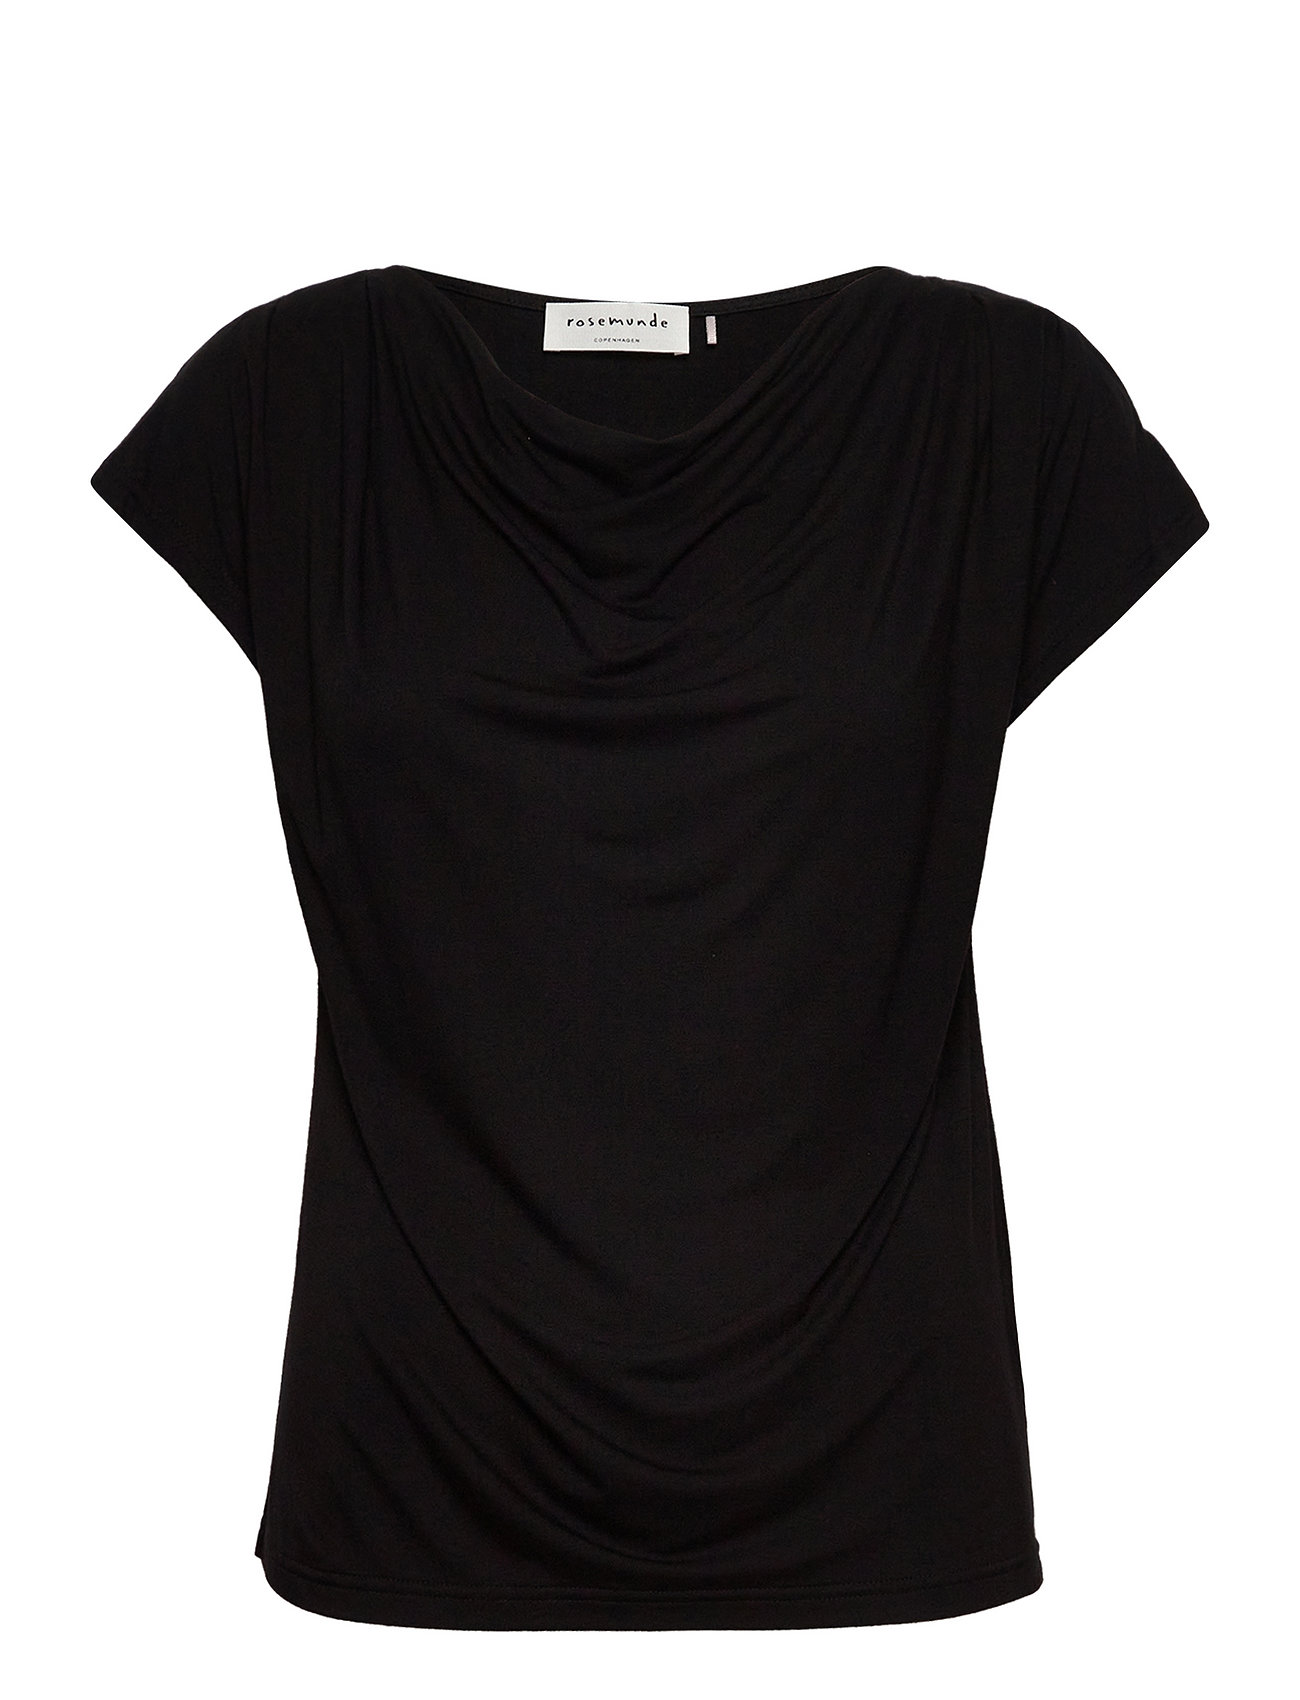 Rosemunde T-shirt (Black/Sort) - 279 kr | Boozt.com